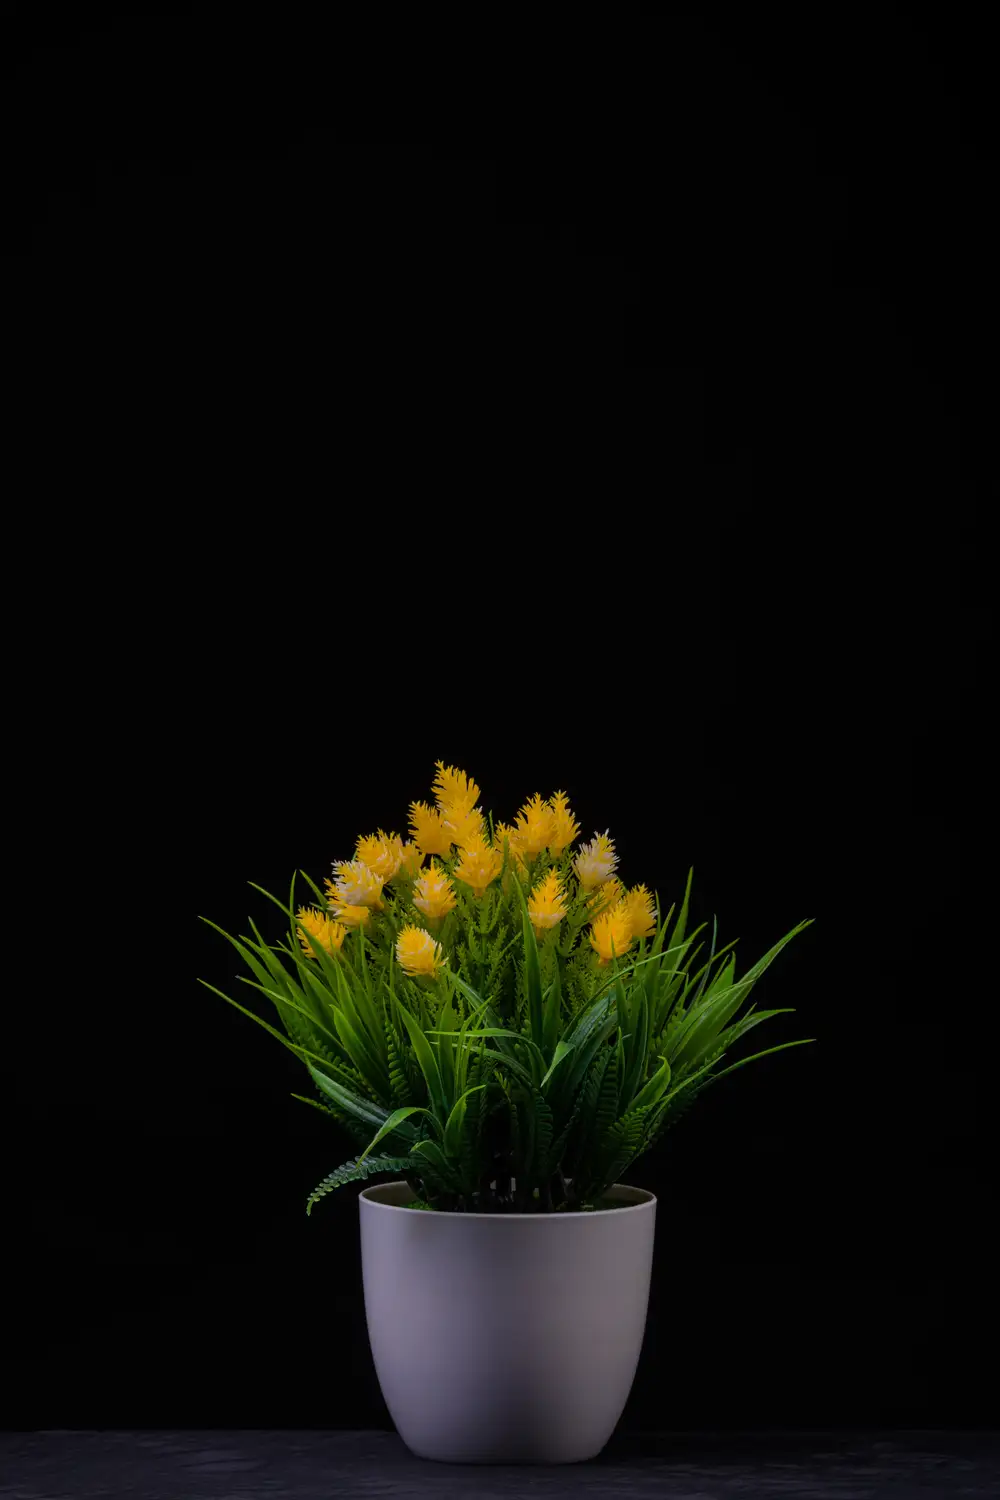 Landscape photograph of a flower vase